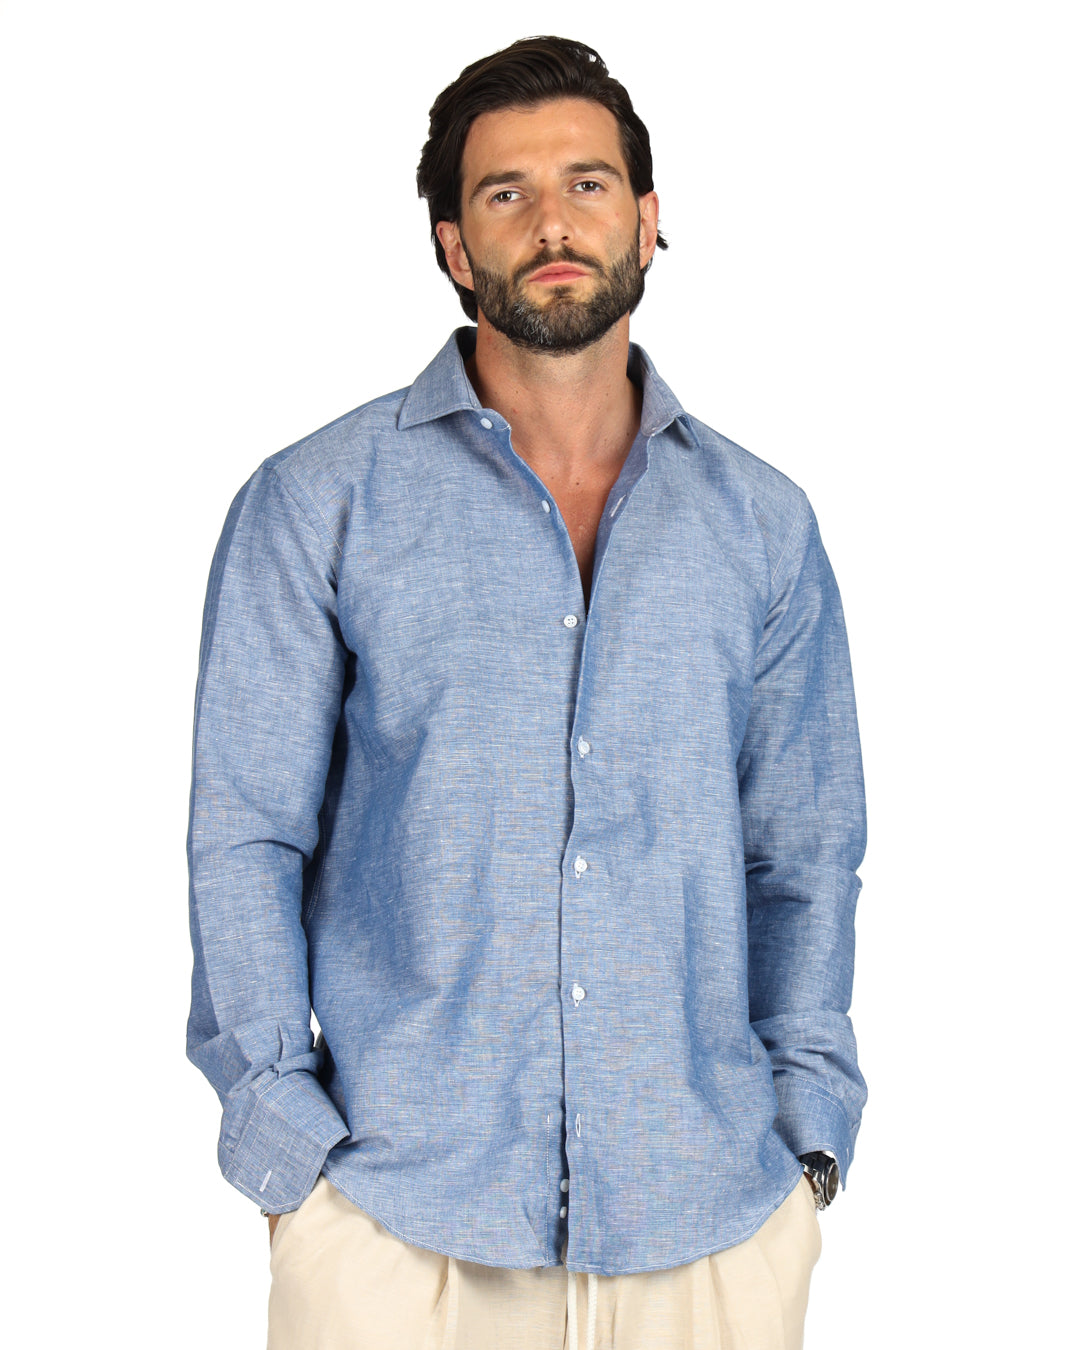 Praiano - Classic linen denim shirt